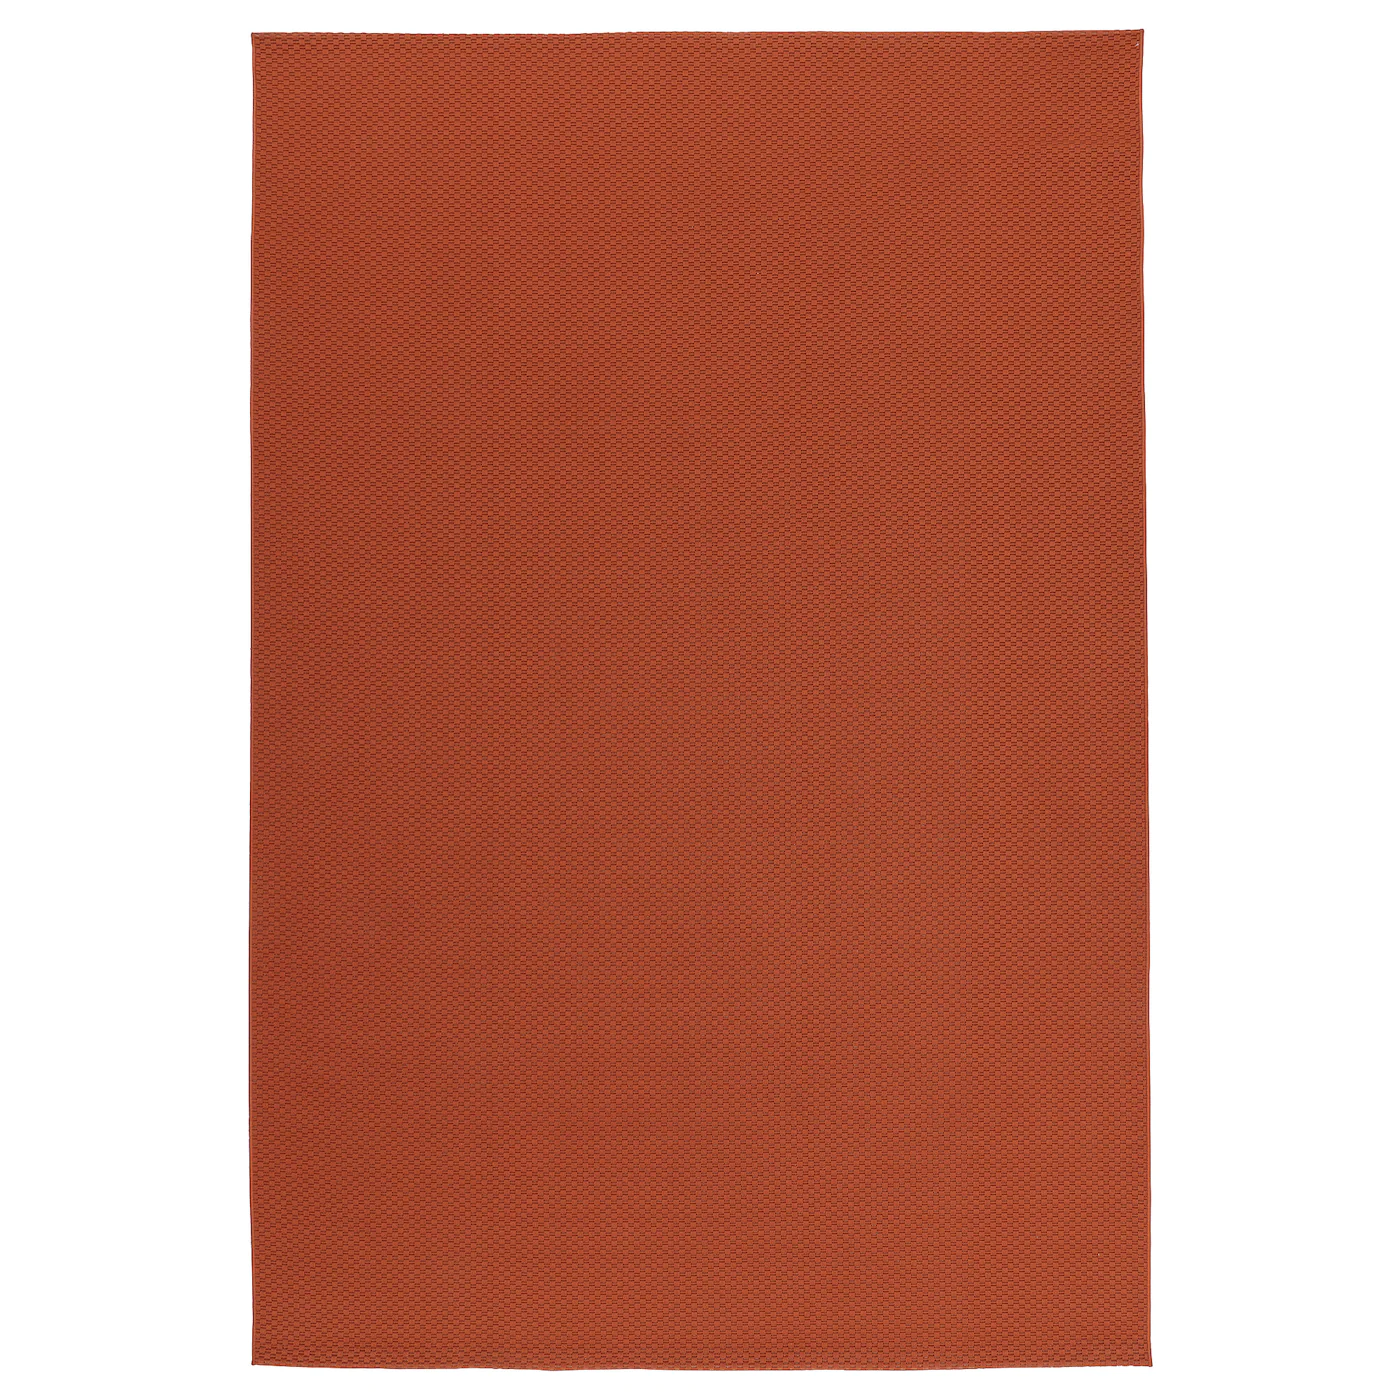 morum-alfombra-int-exterior-rojo-oxido_0918187_pe786129_s5.jpg